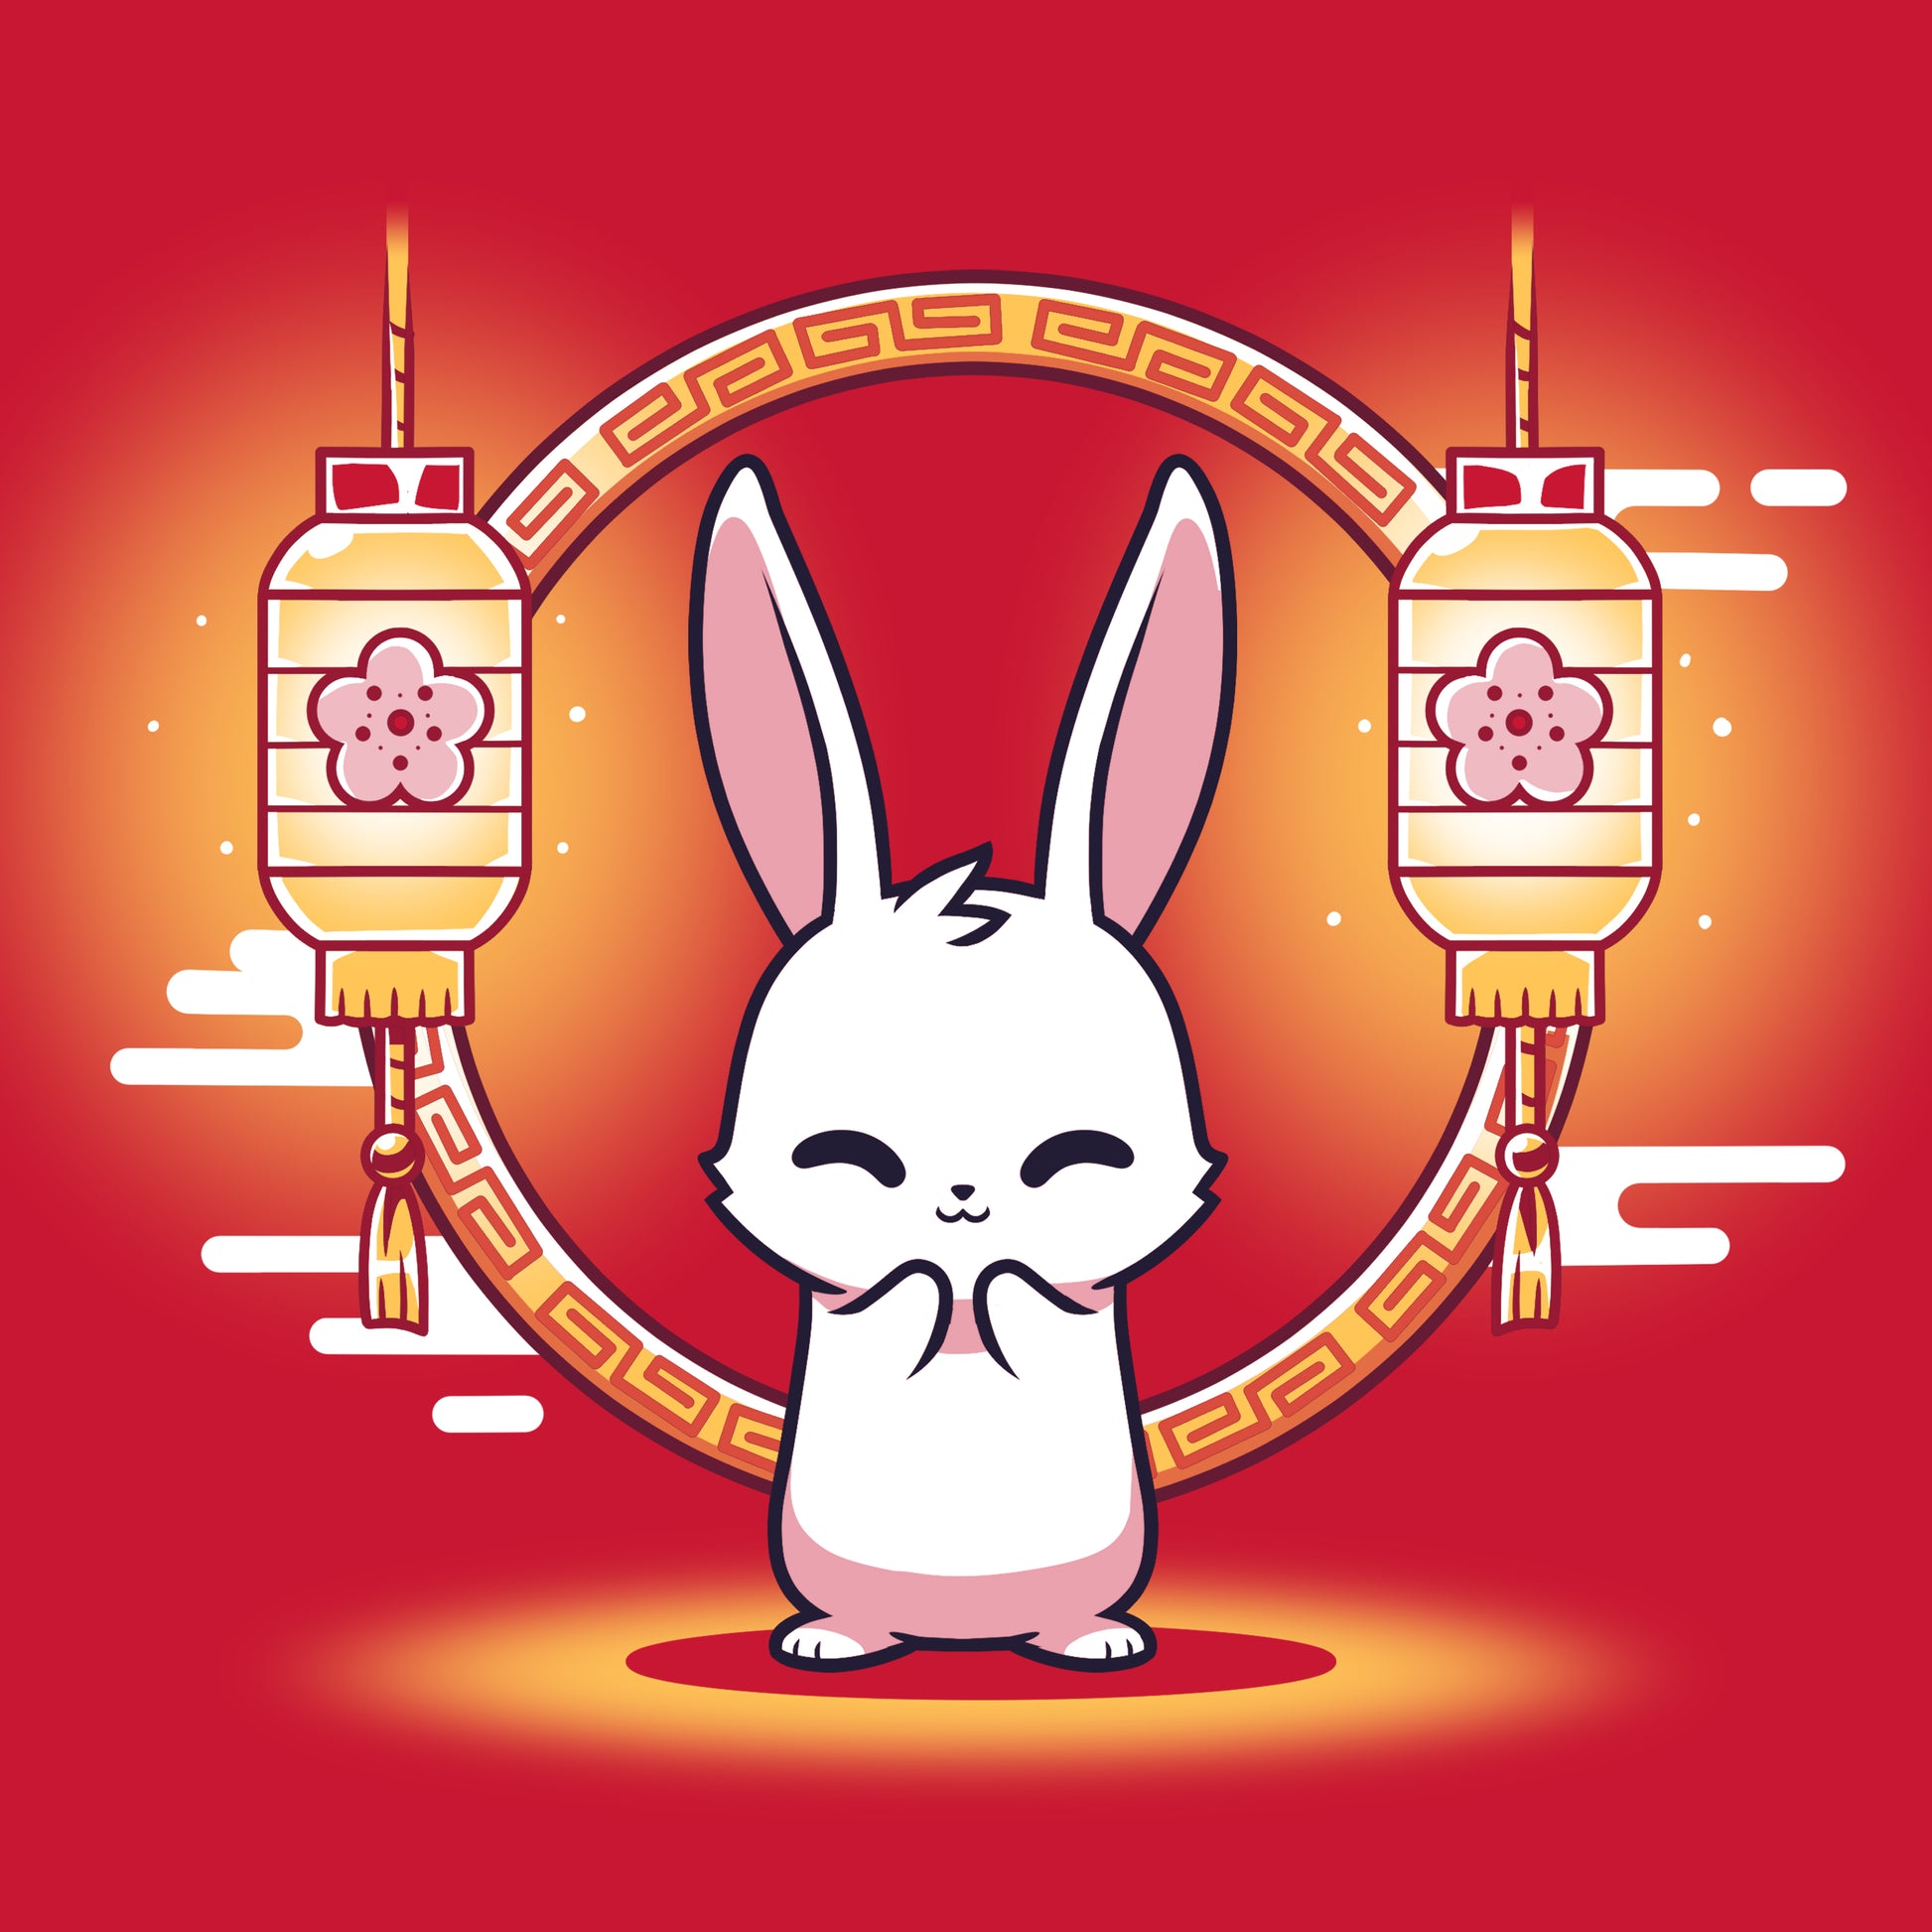 Lunar New Year Rabbit with lanterns on a red background, Teeturtle original.